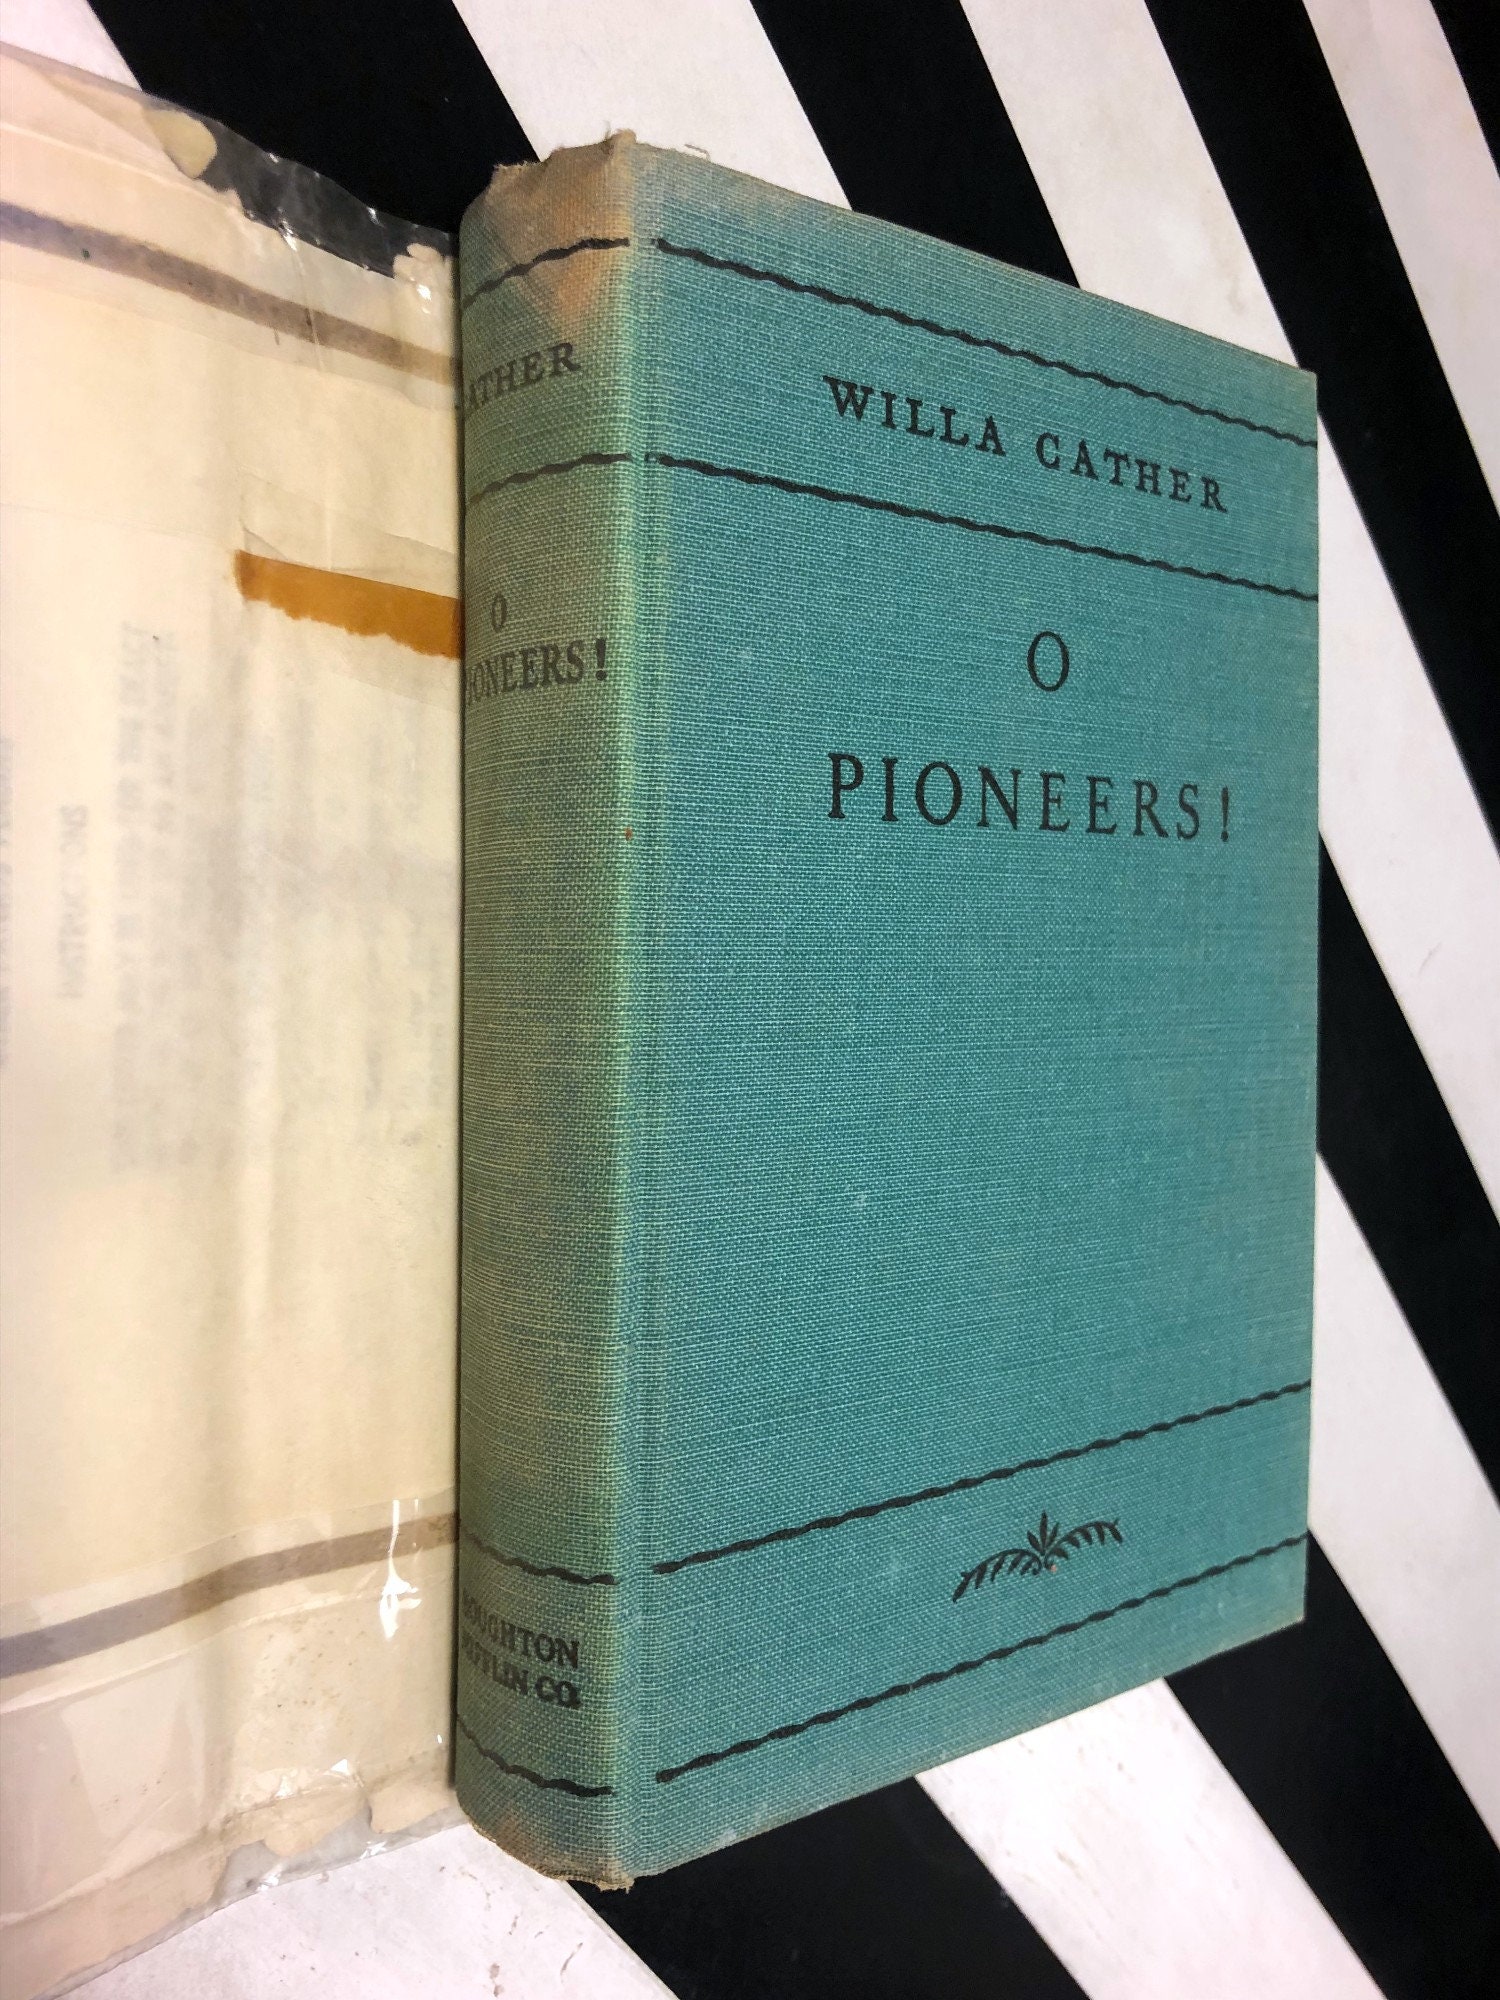 o pioneers book